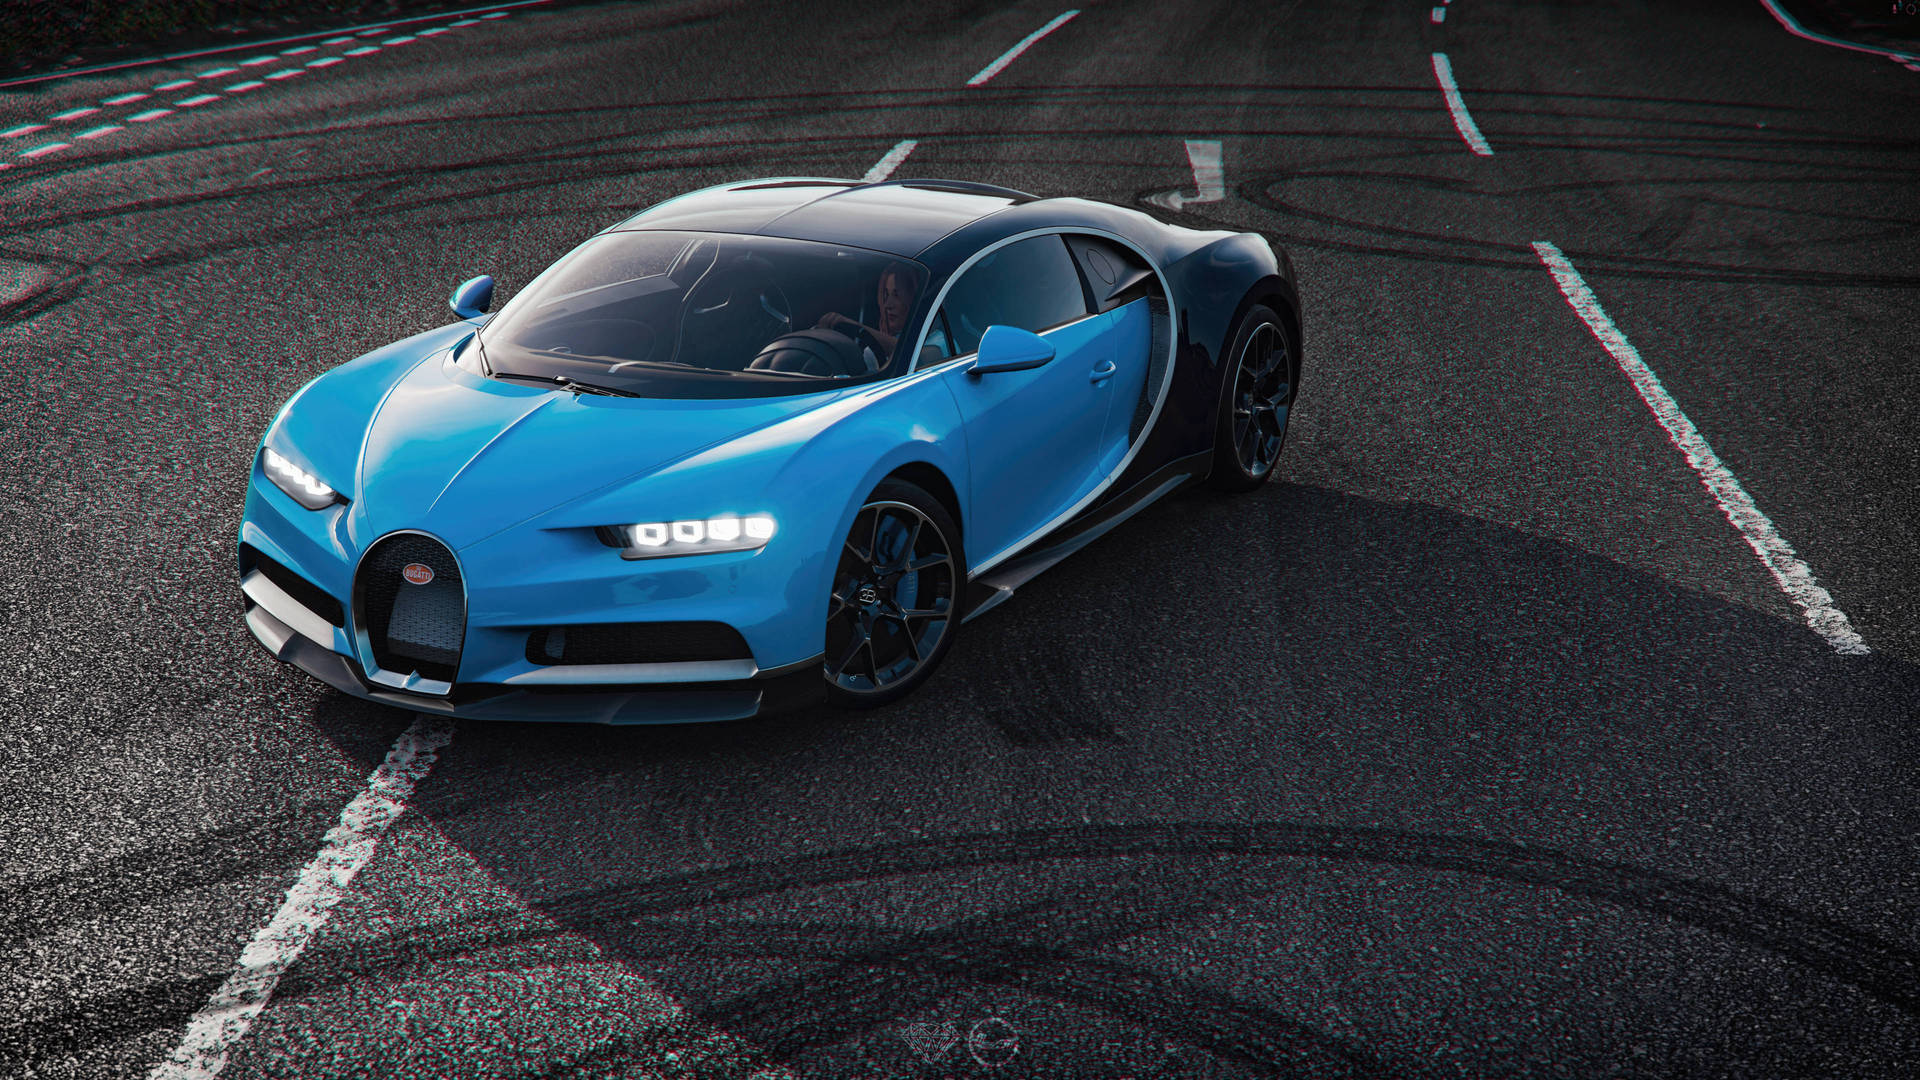 Stunning Bugatti Chiron Immersion In Forza Horizon 4 Gameplay Background